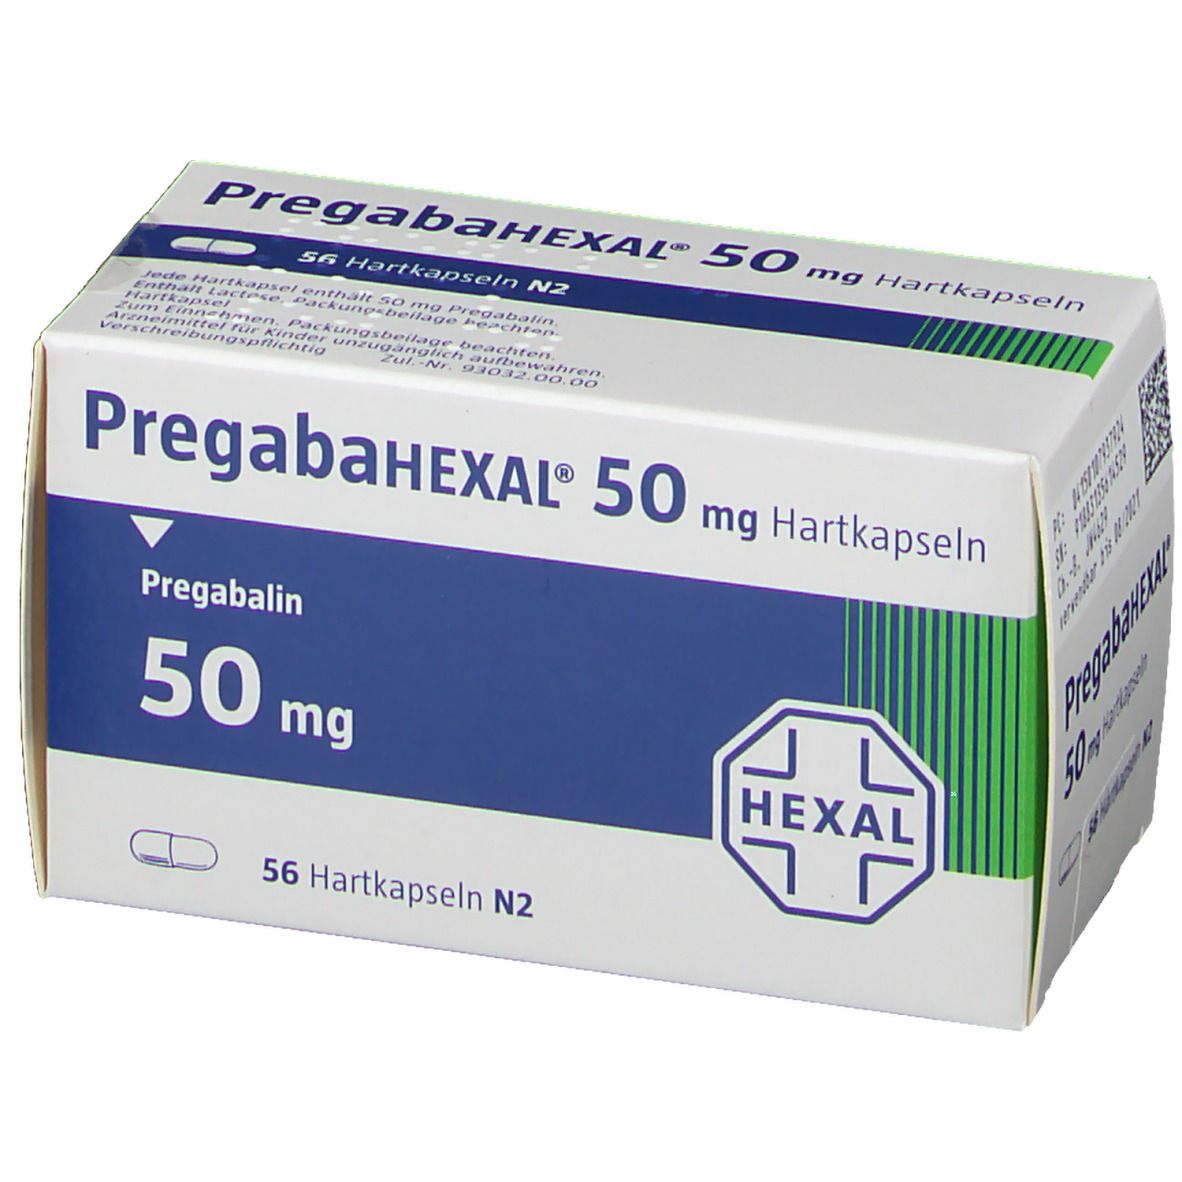 PregabaHEXAL® 50 mg